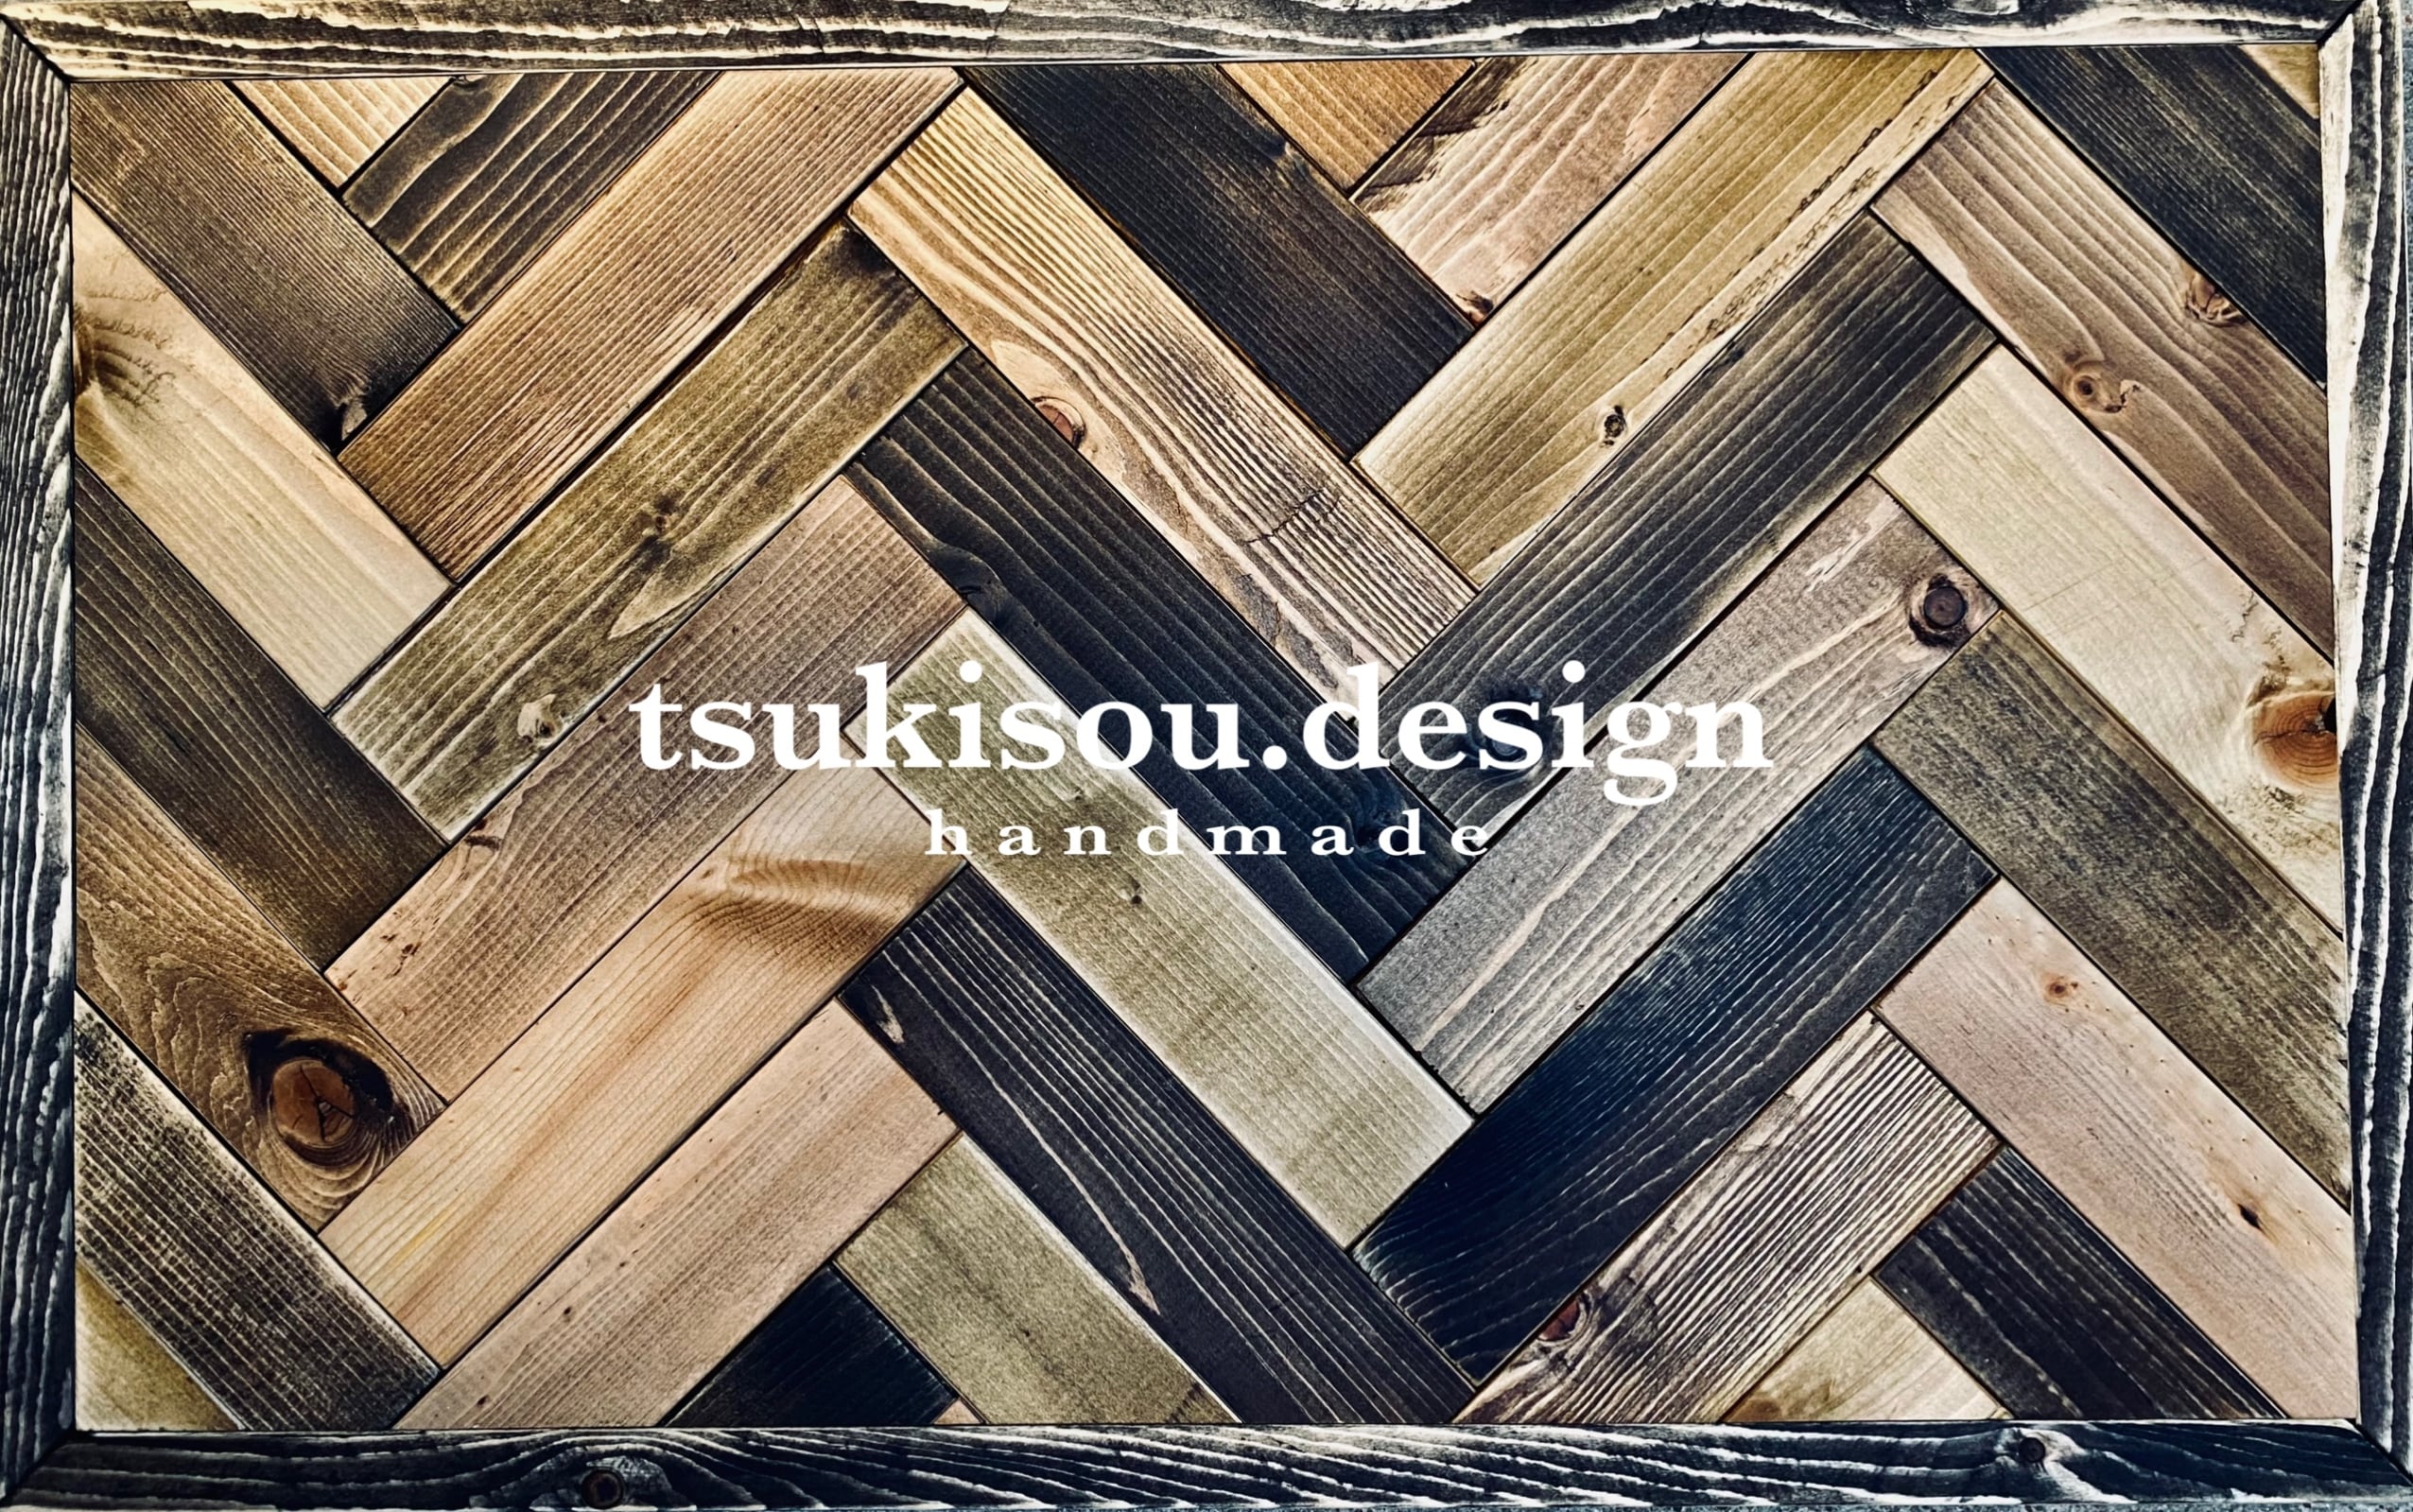 tsukisou.design